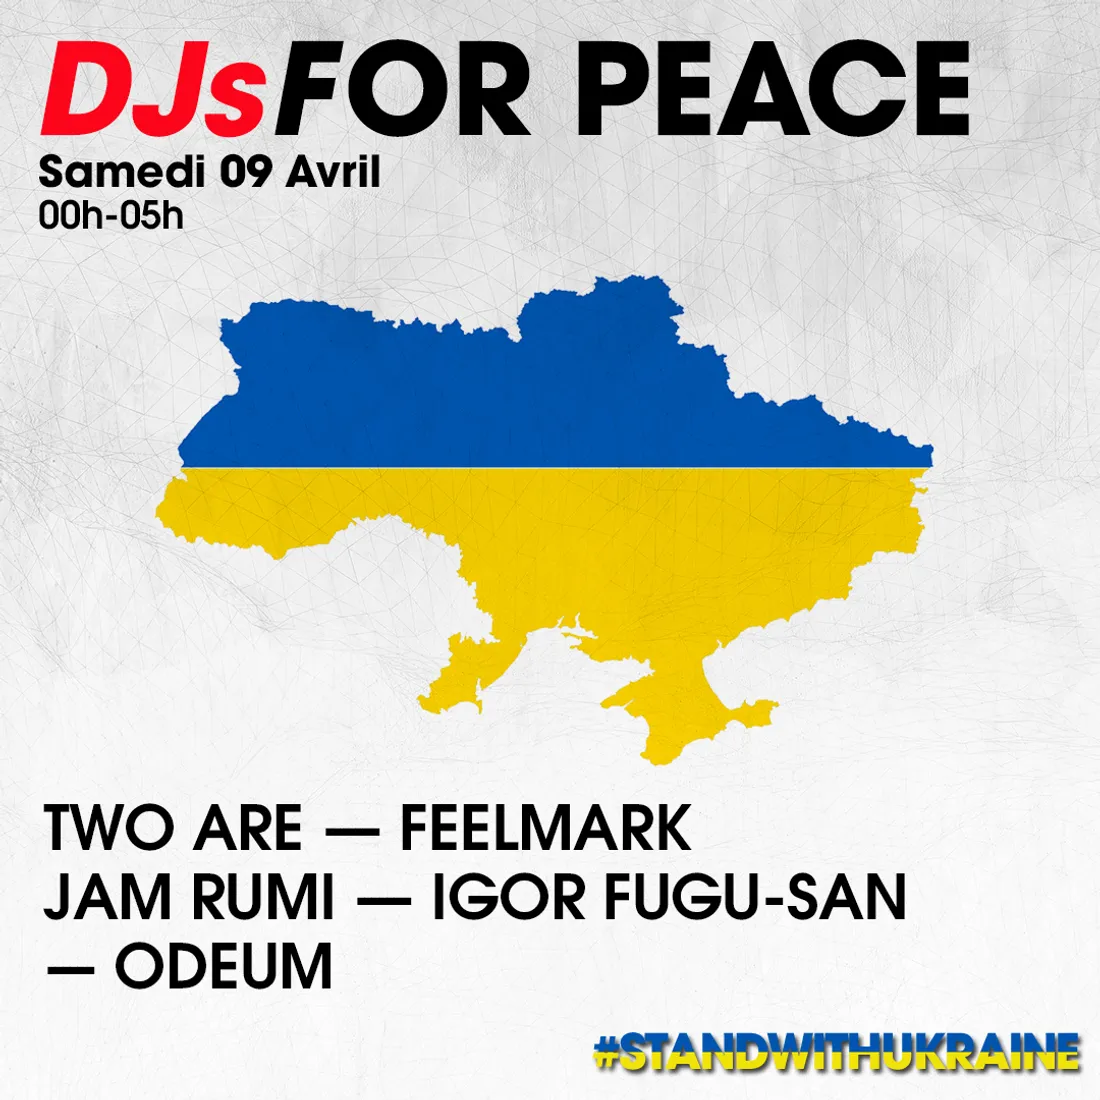 DJS FOR PEACE